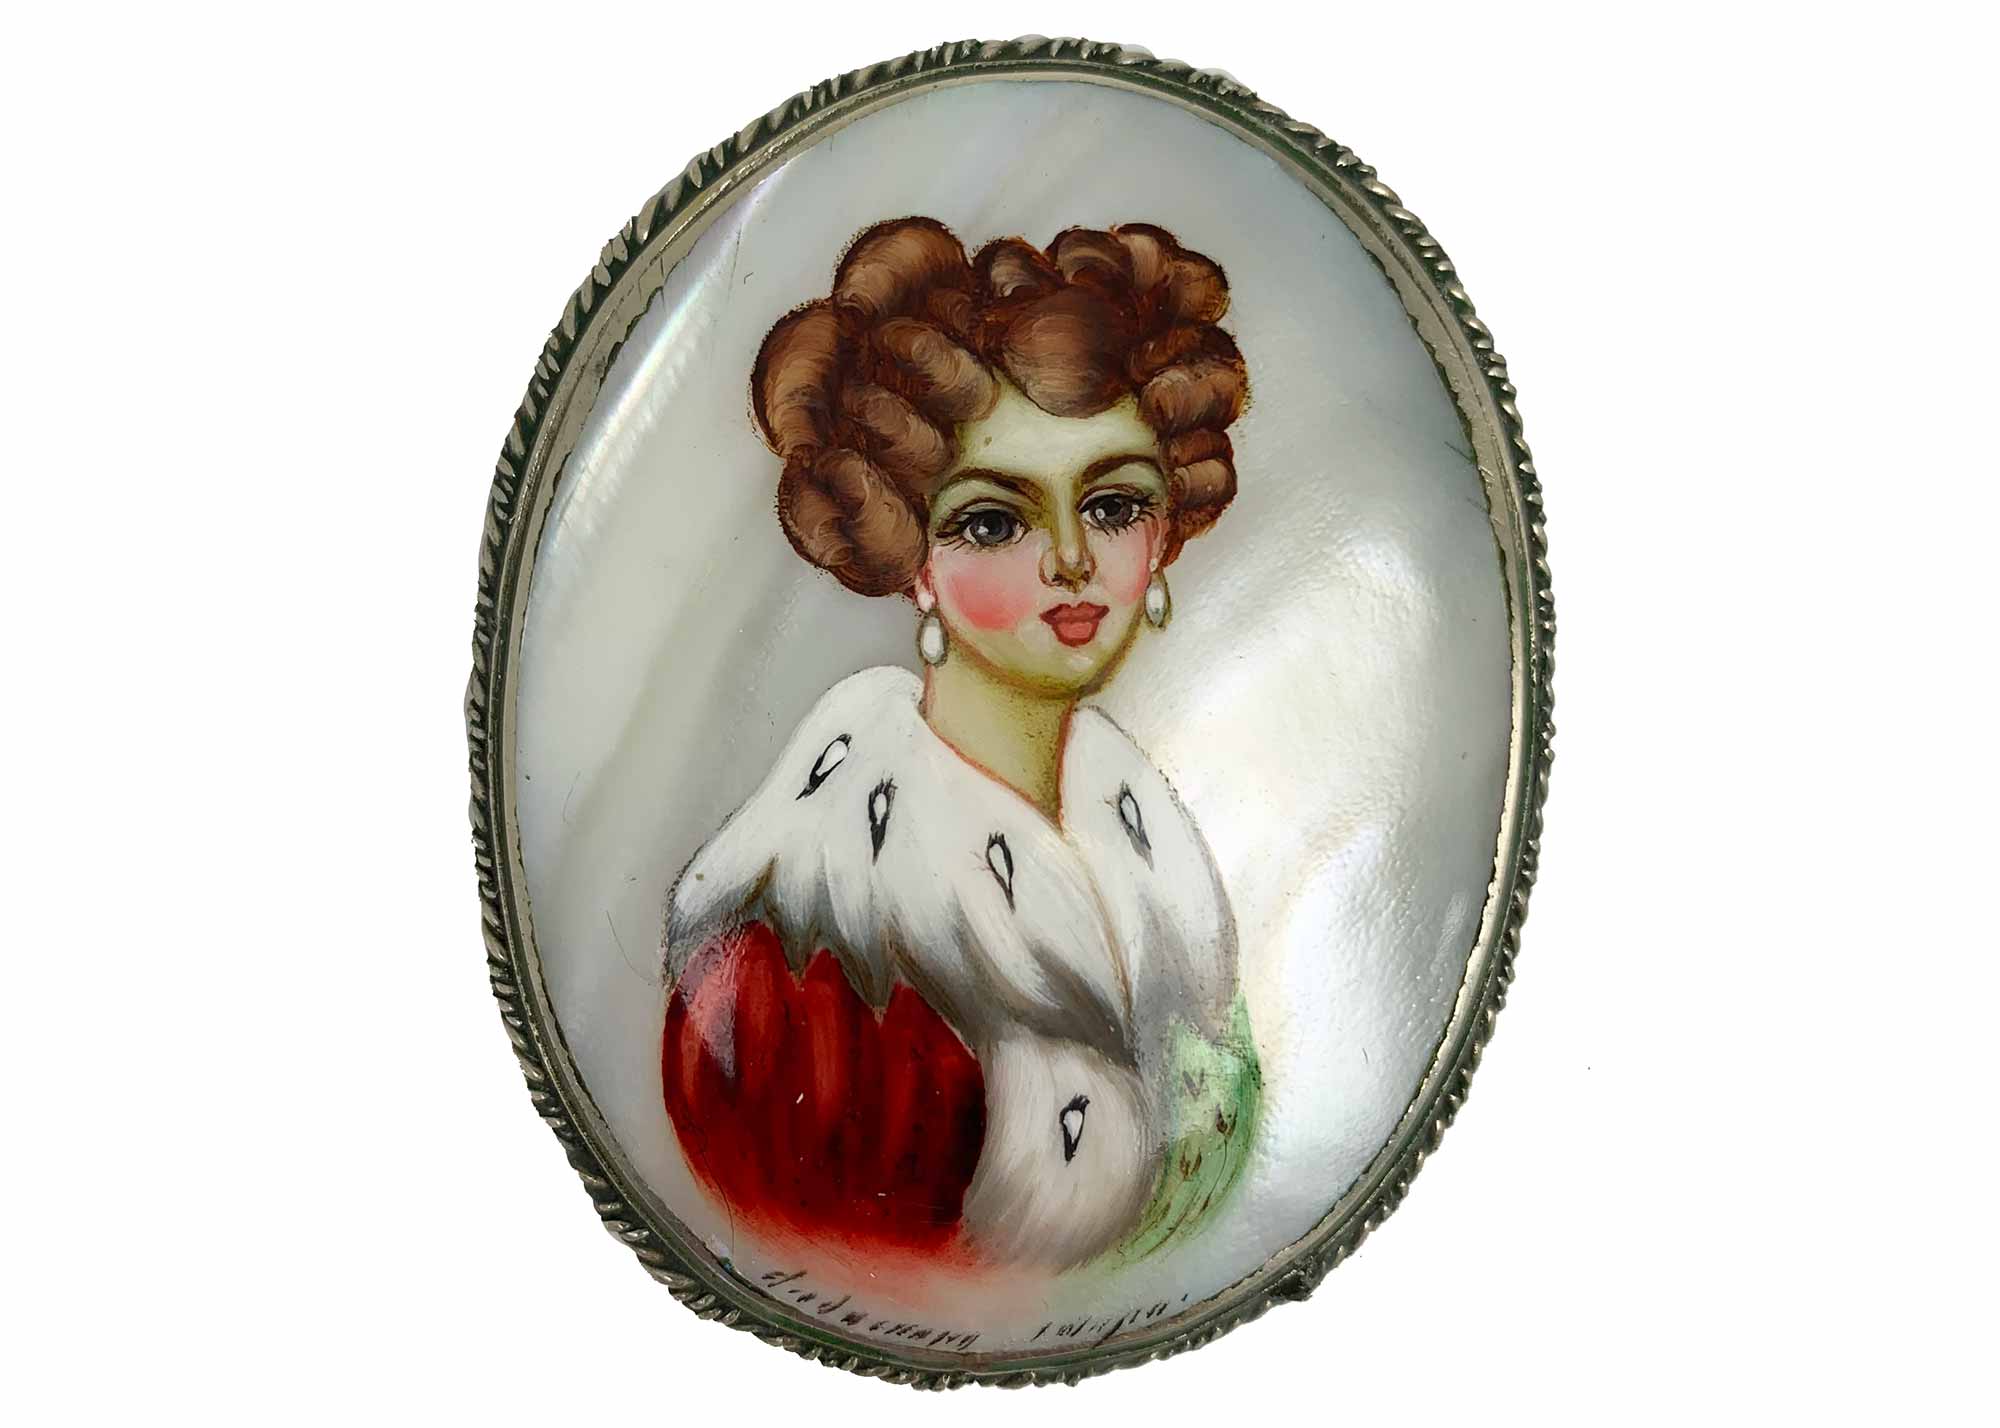 Buy Vintage Mother of Pearl Portrait Brooch Sonya at GoldenCockerel.com